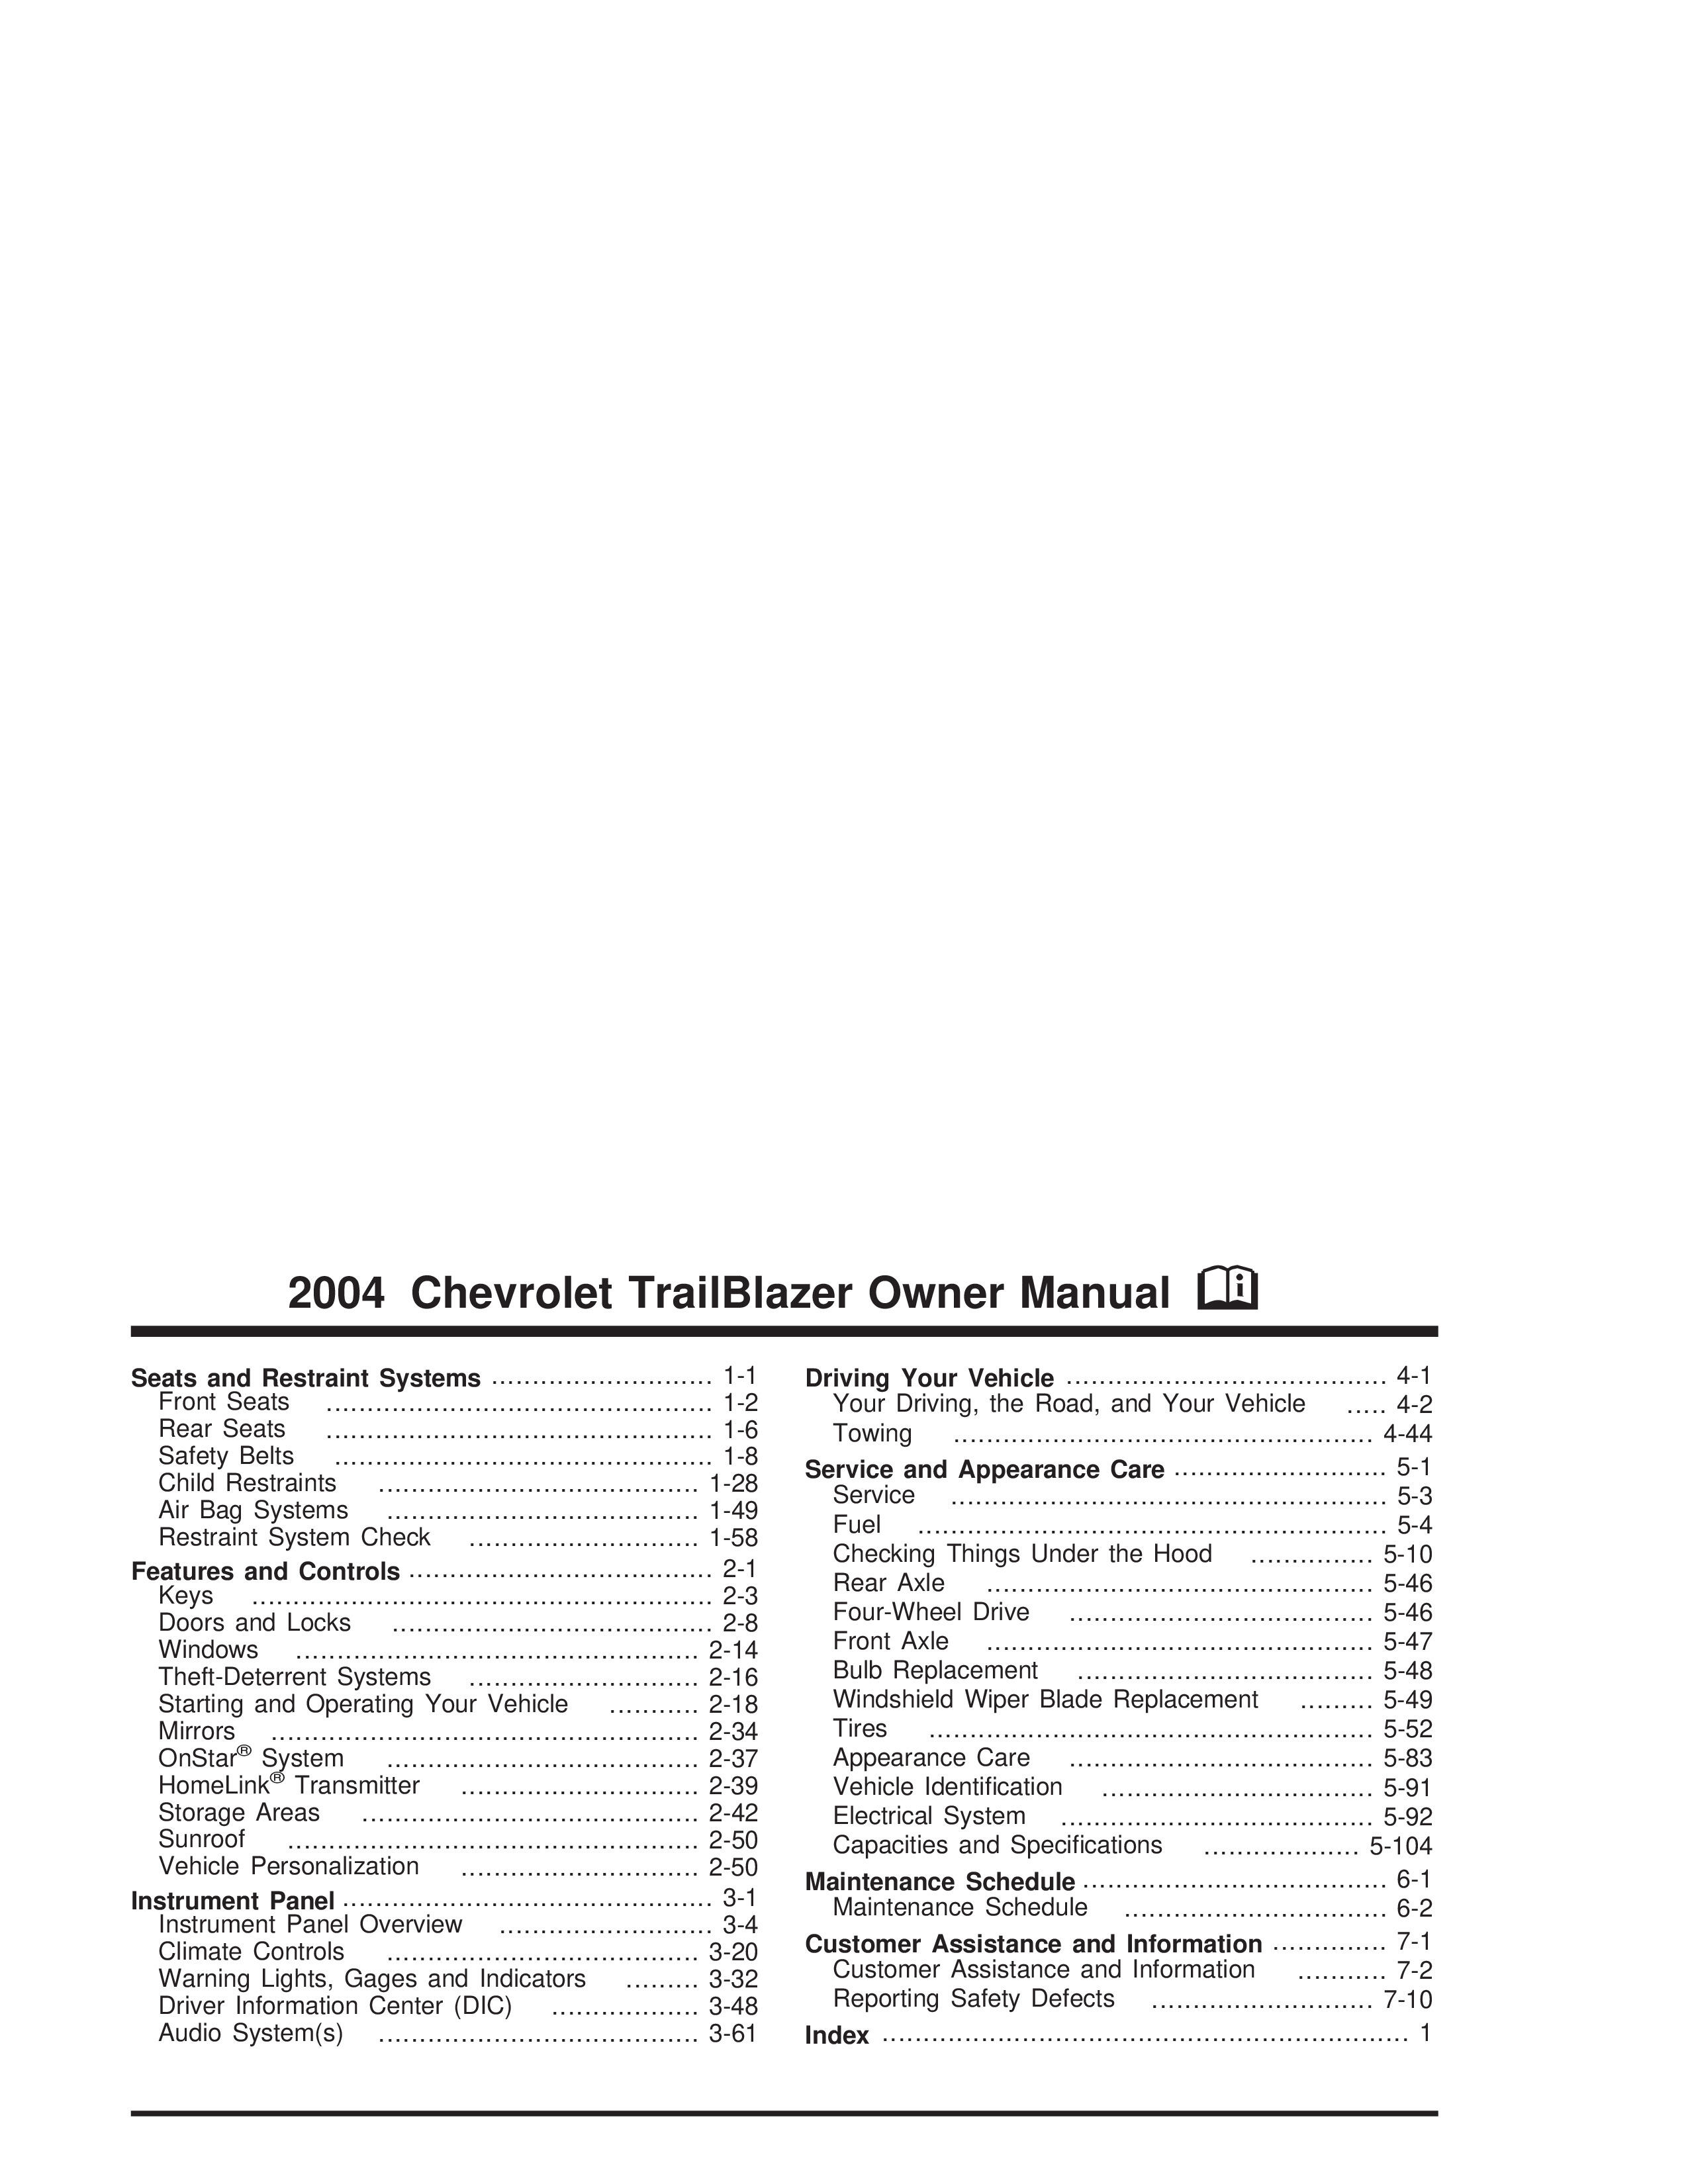 2004 Chevrolet Trailblazer Owner's Manual